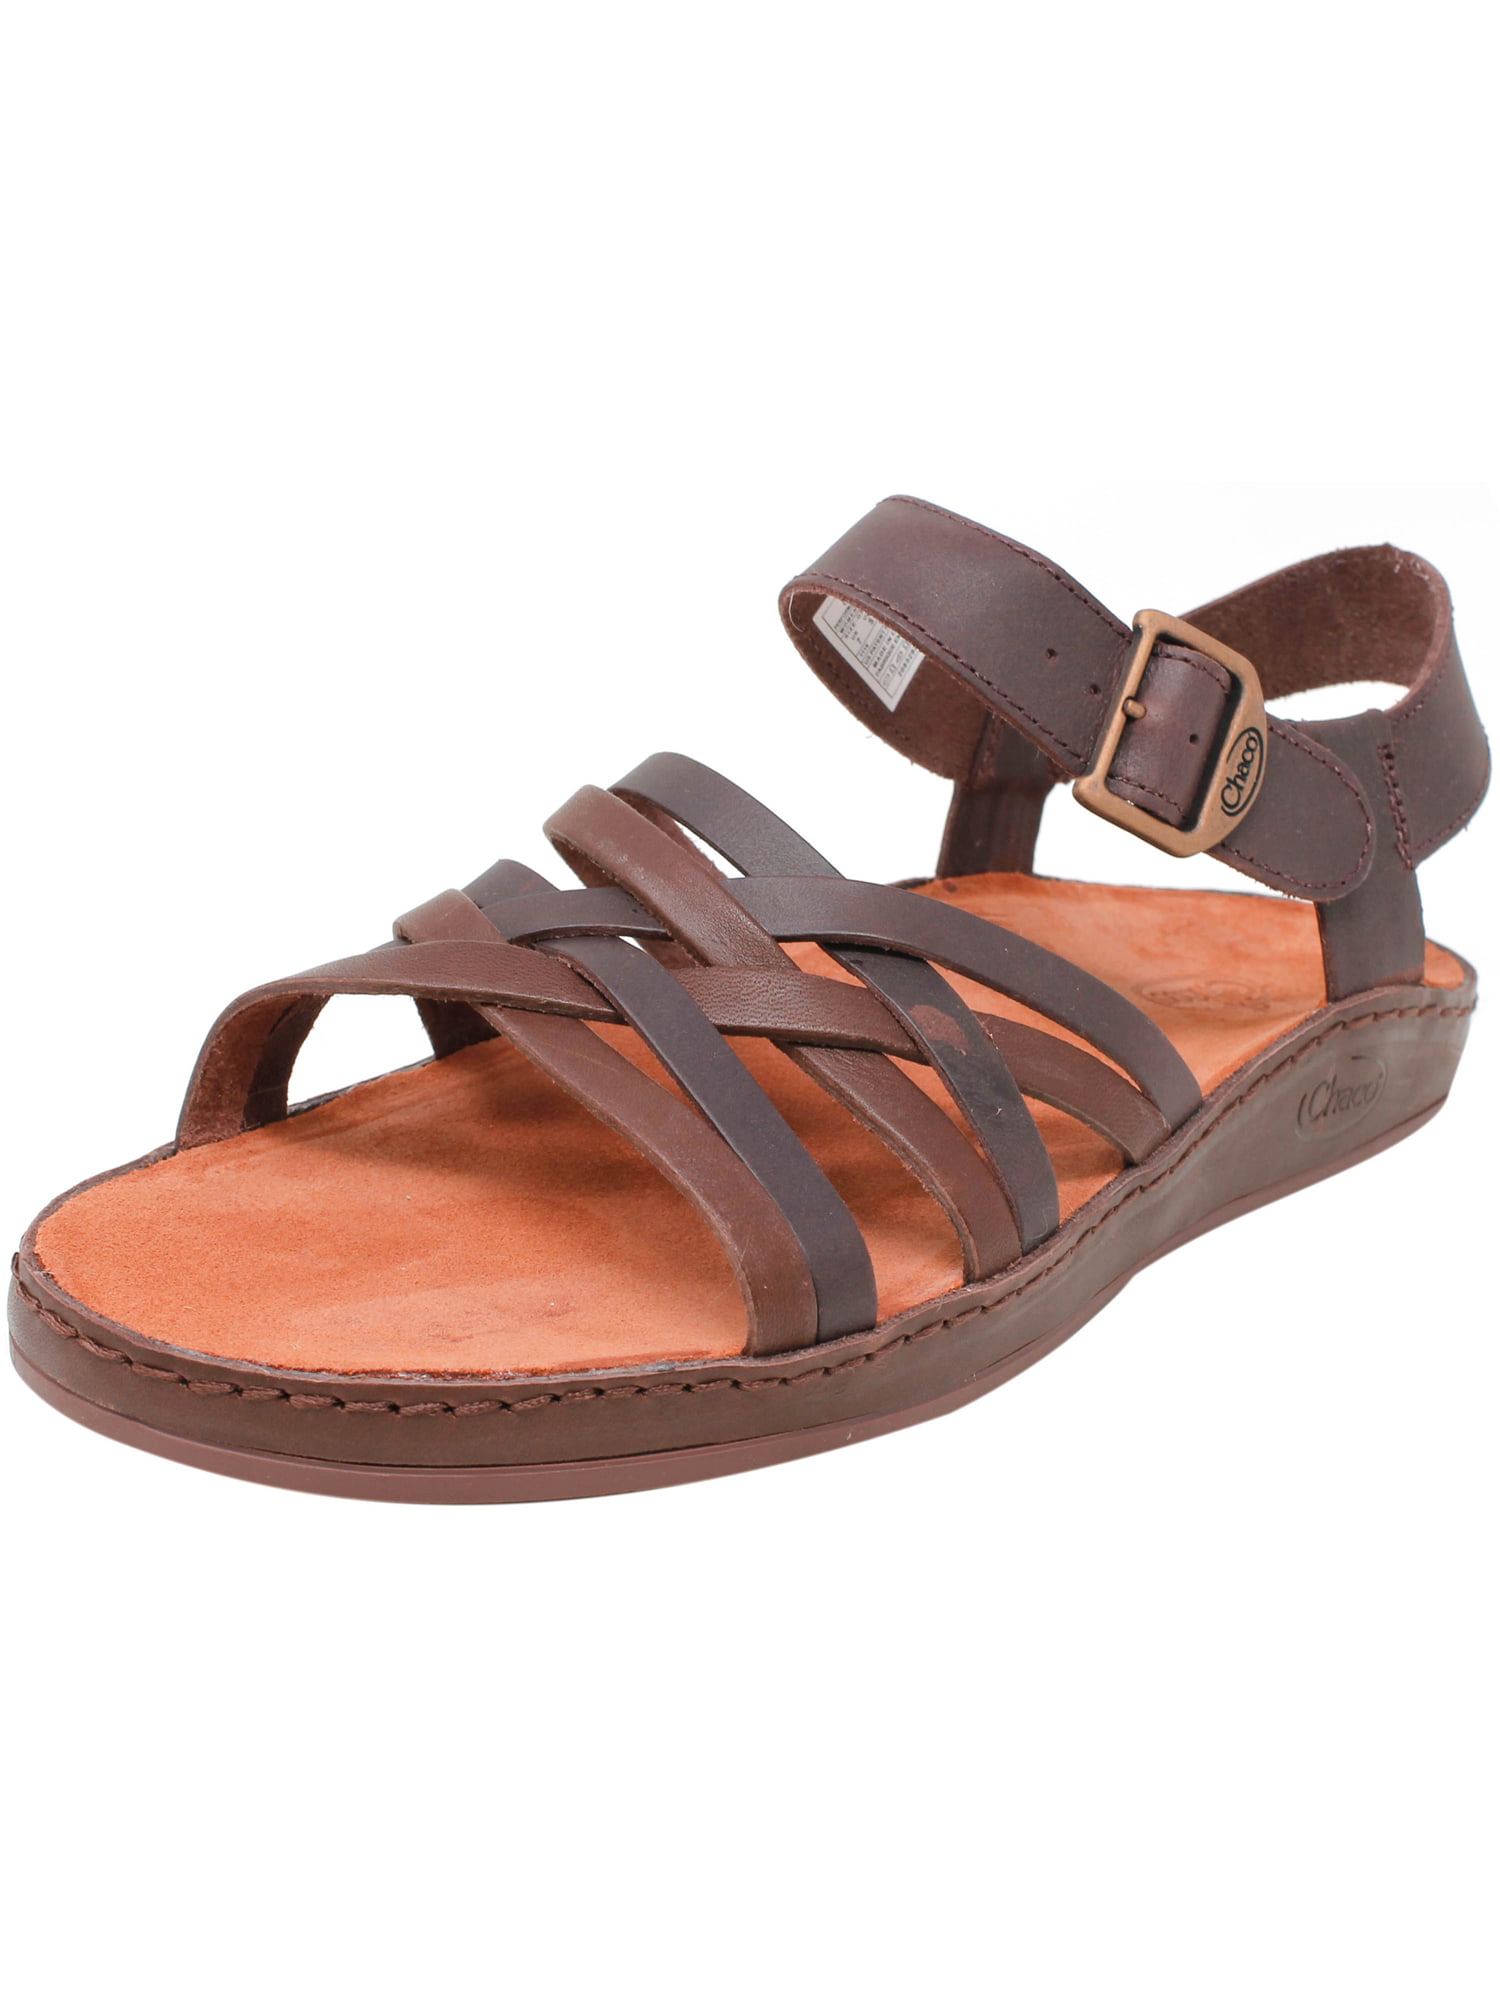 Chaco Women's Fallon Java Ankle-High Leather Sandal - 7M - Walmart.com